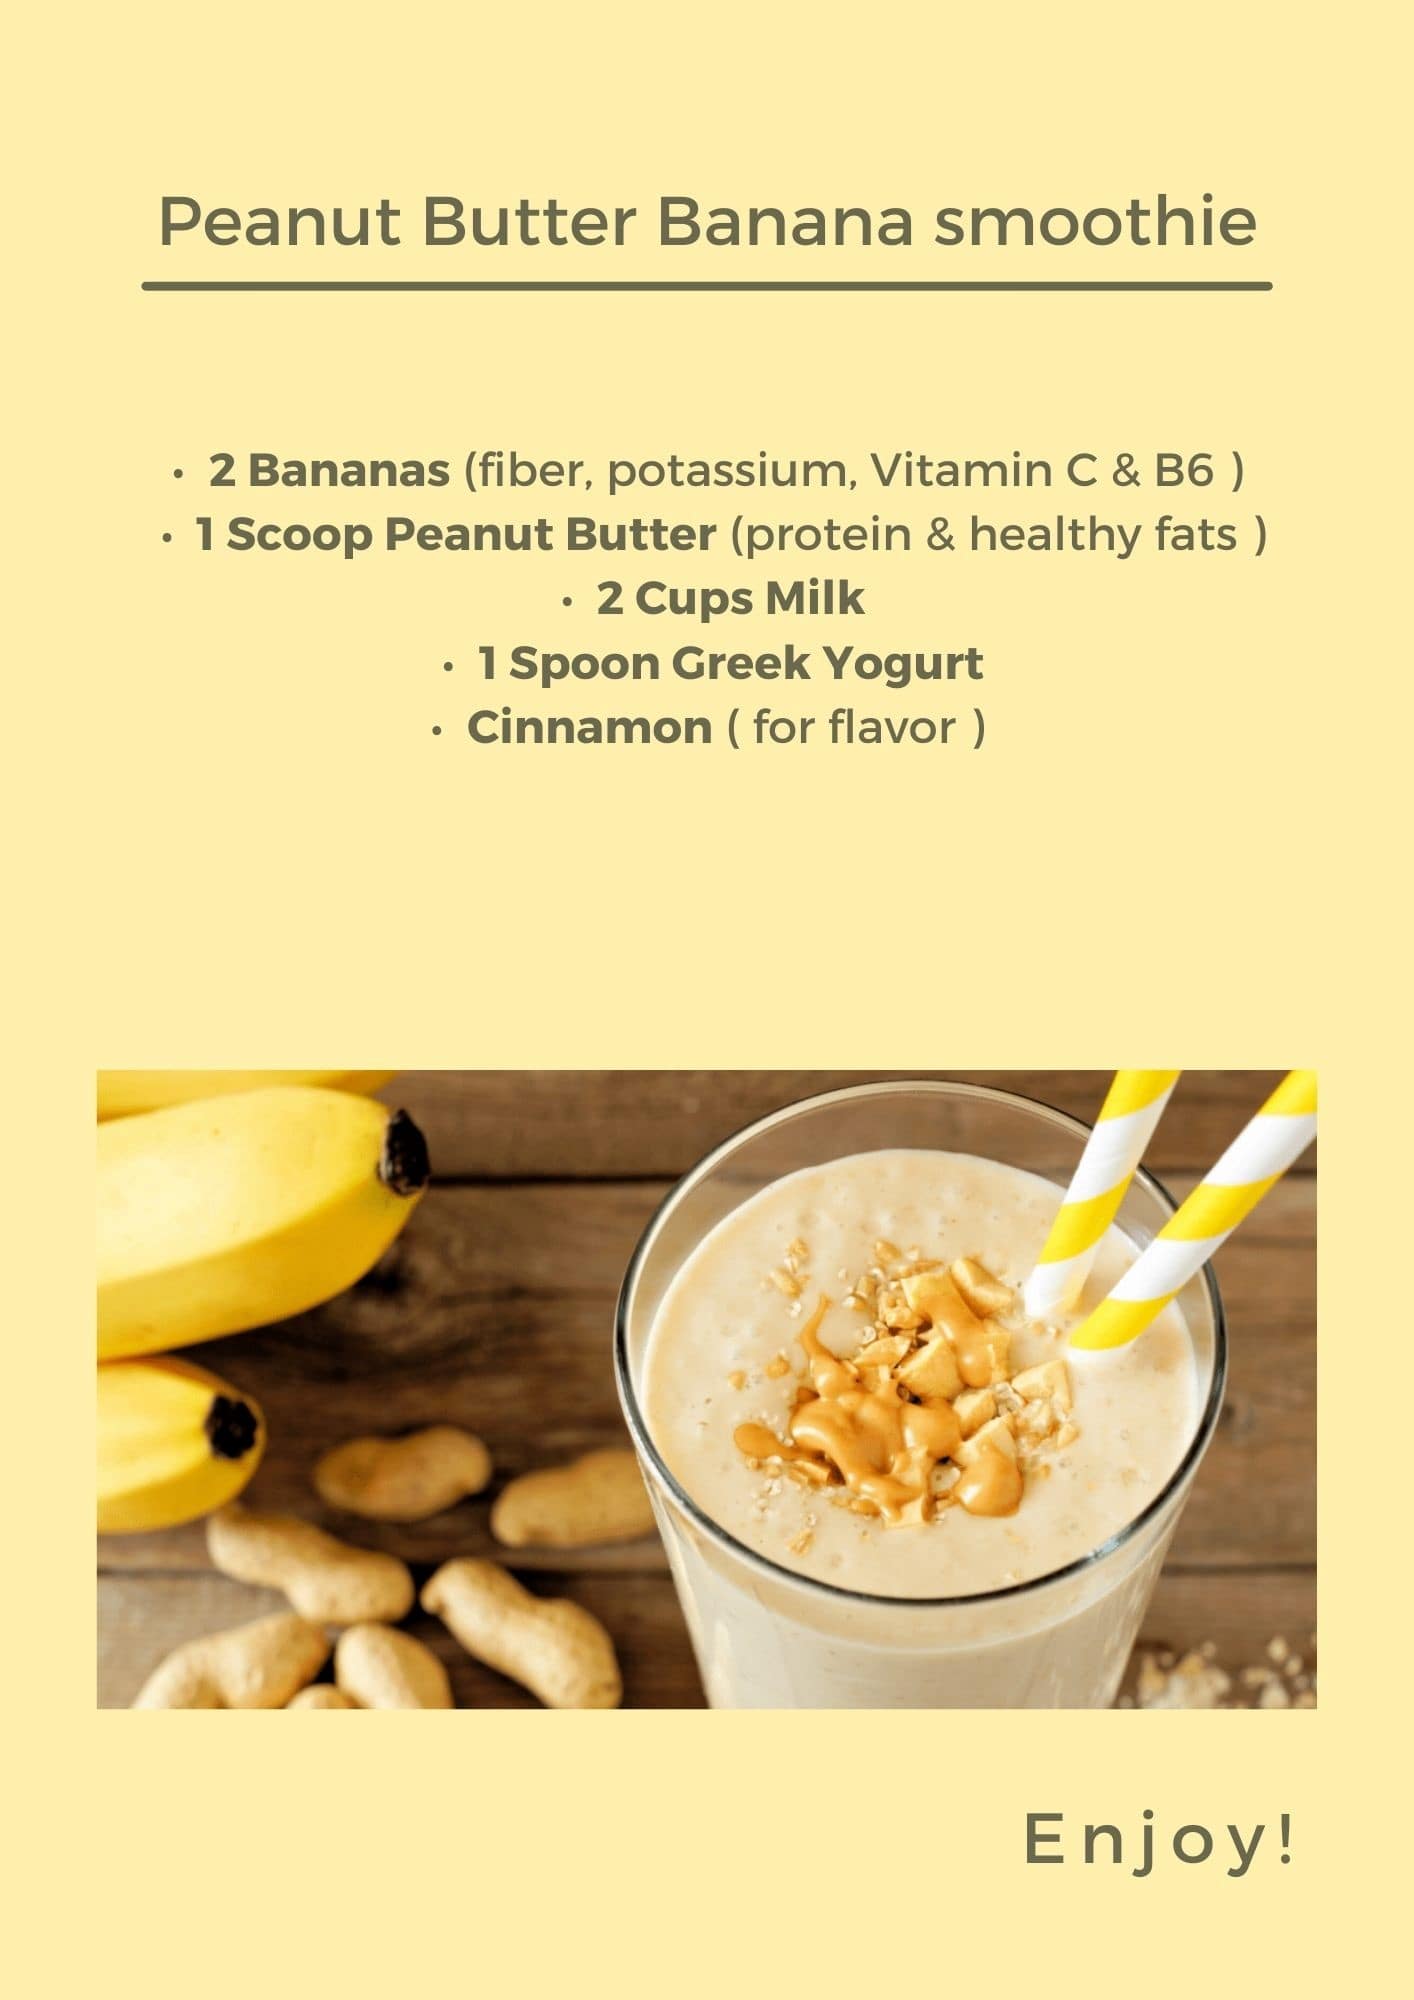 Peanut butter banana smoothie recipe